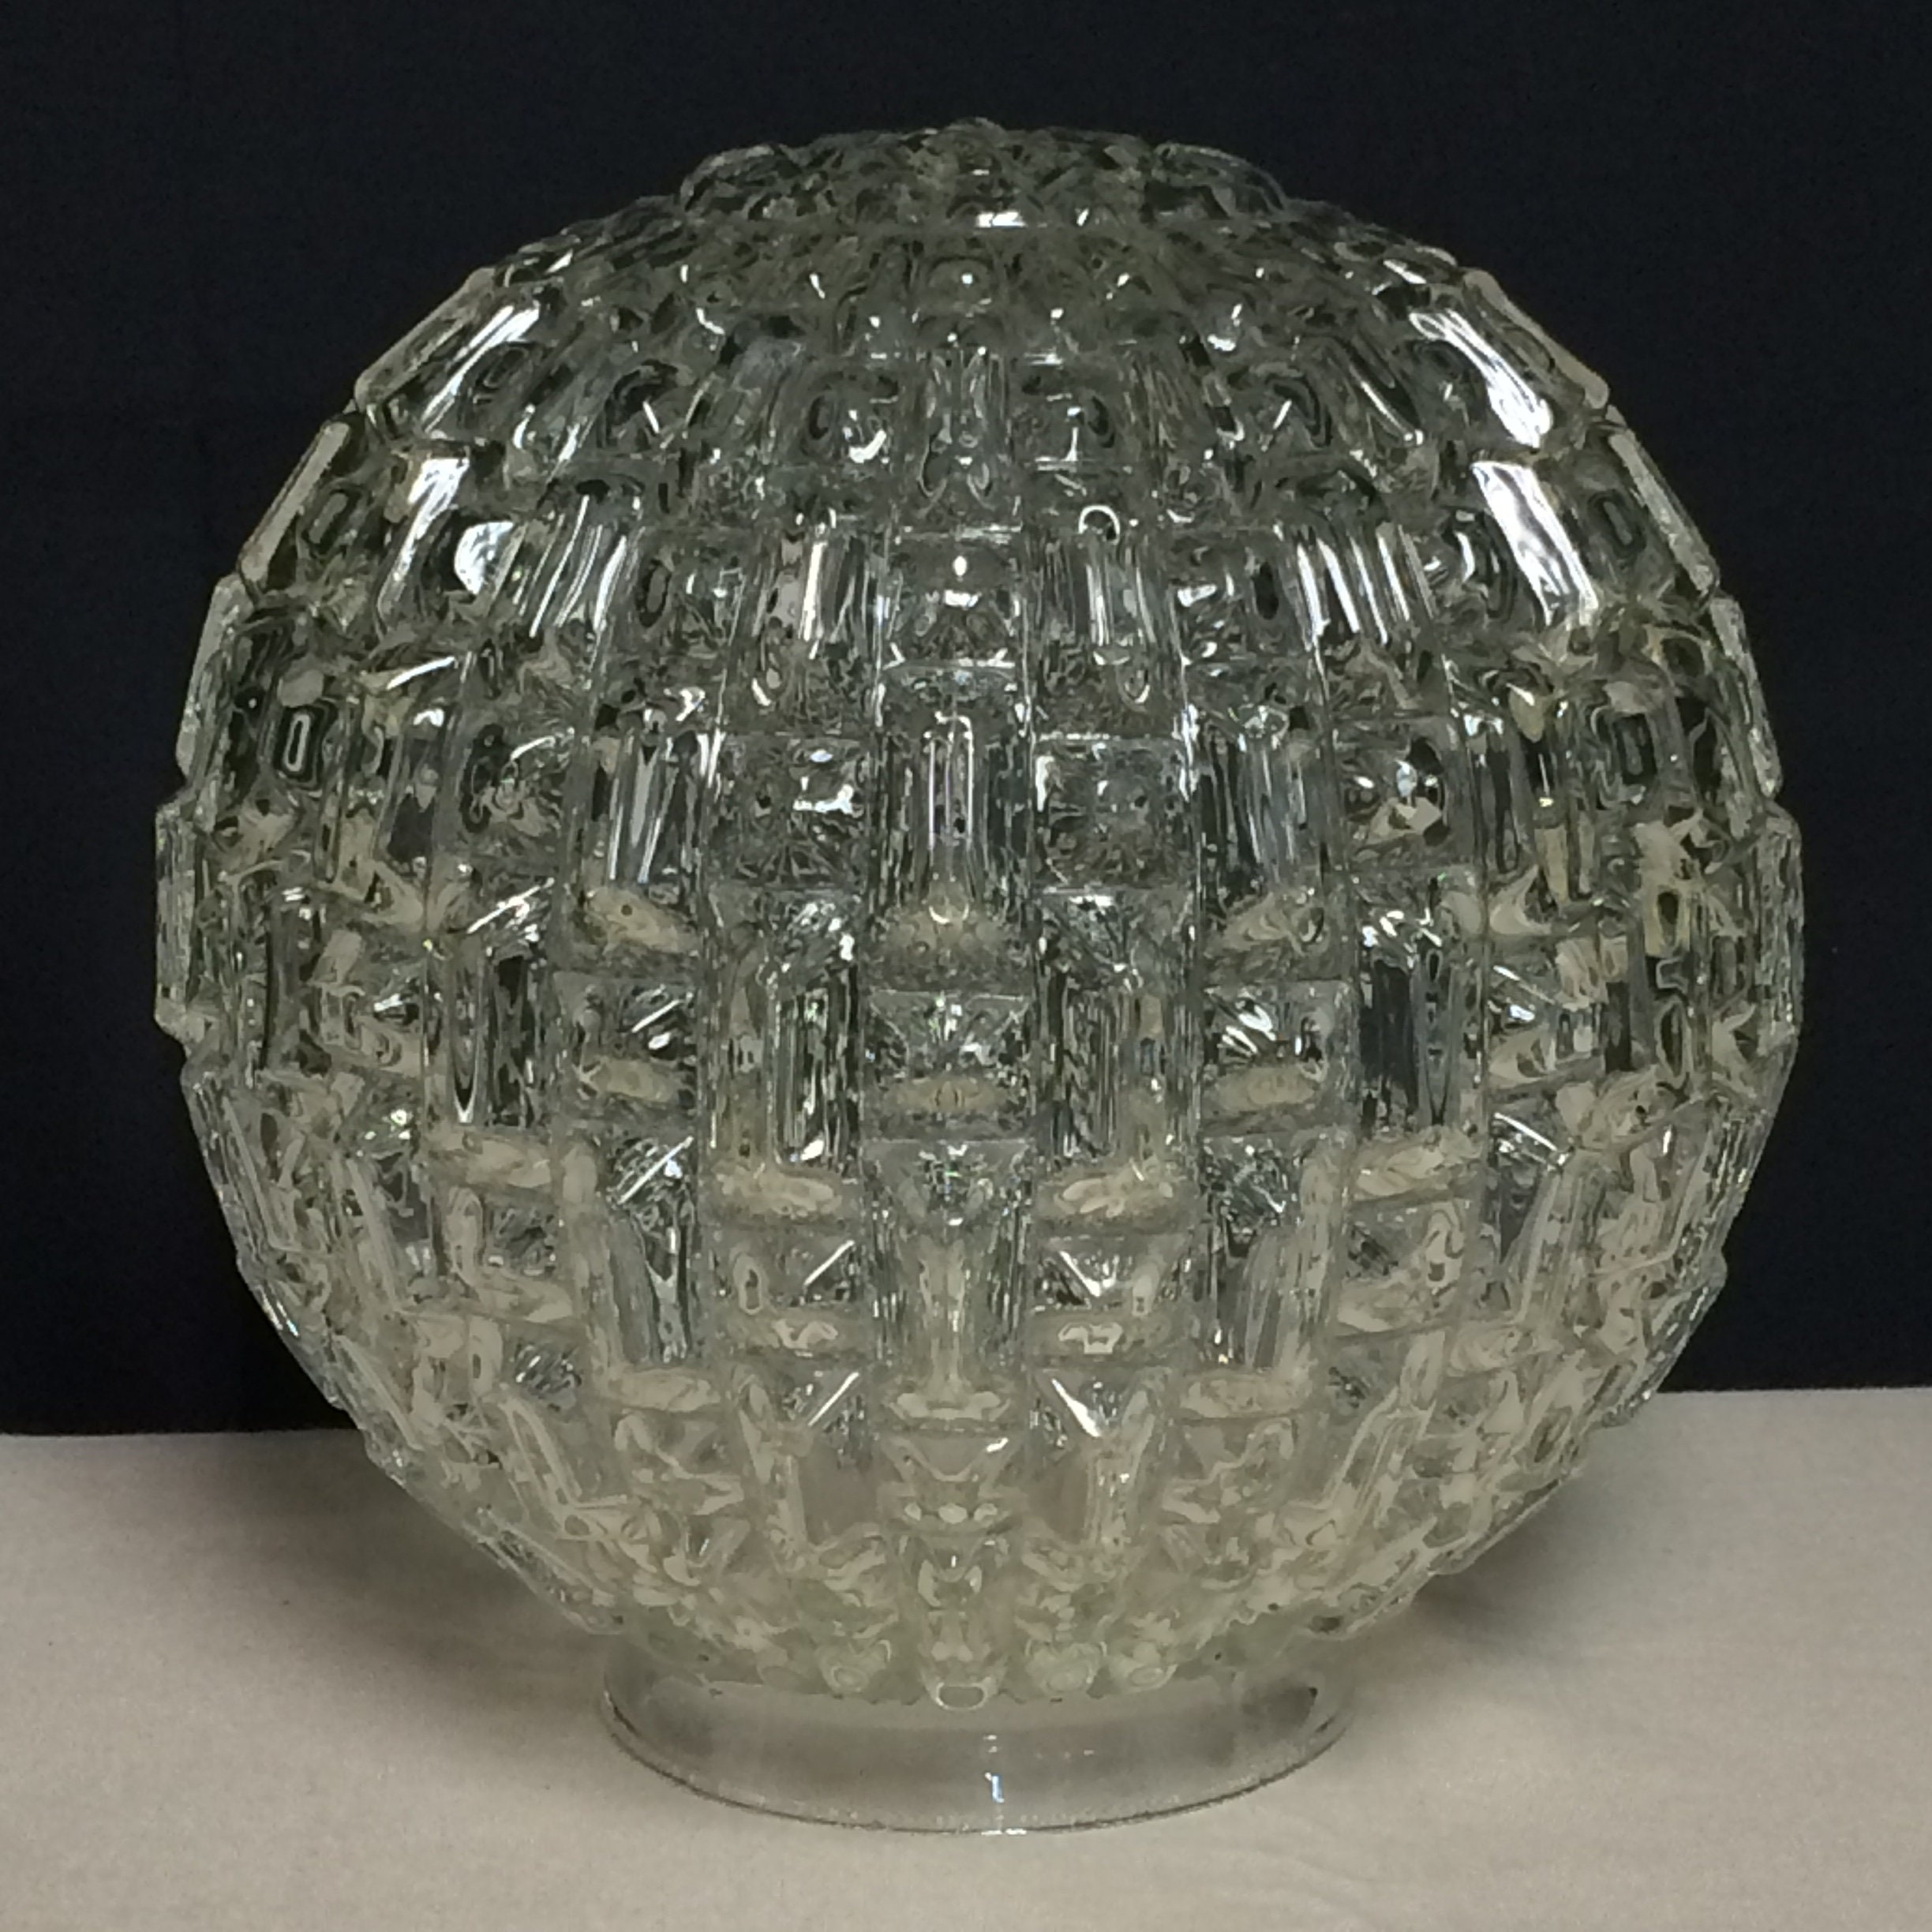 Vintage Cut Glass Pendant Ball Light Globe Shade, Art Deco Round Ball